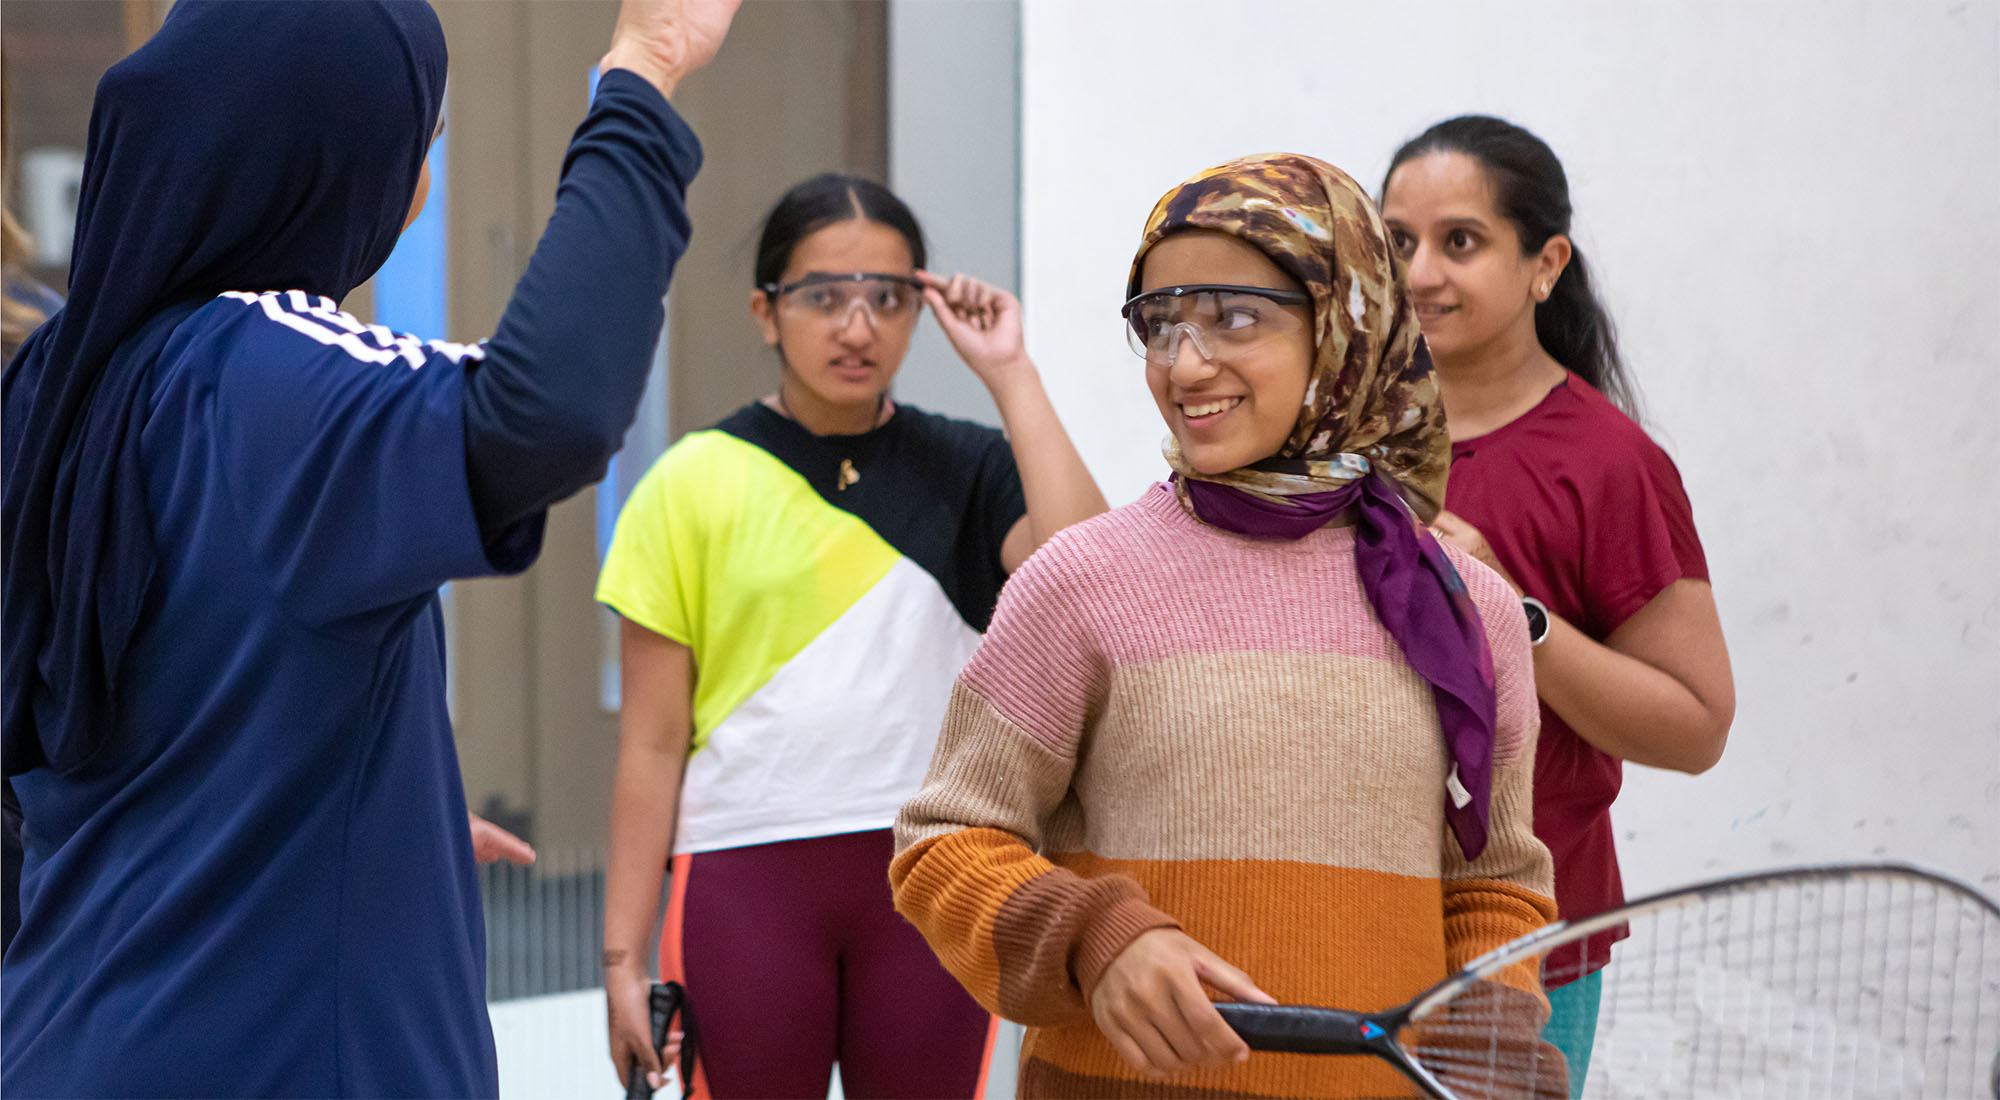 A Muslim coach instructing women on a squash court